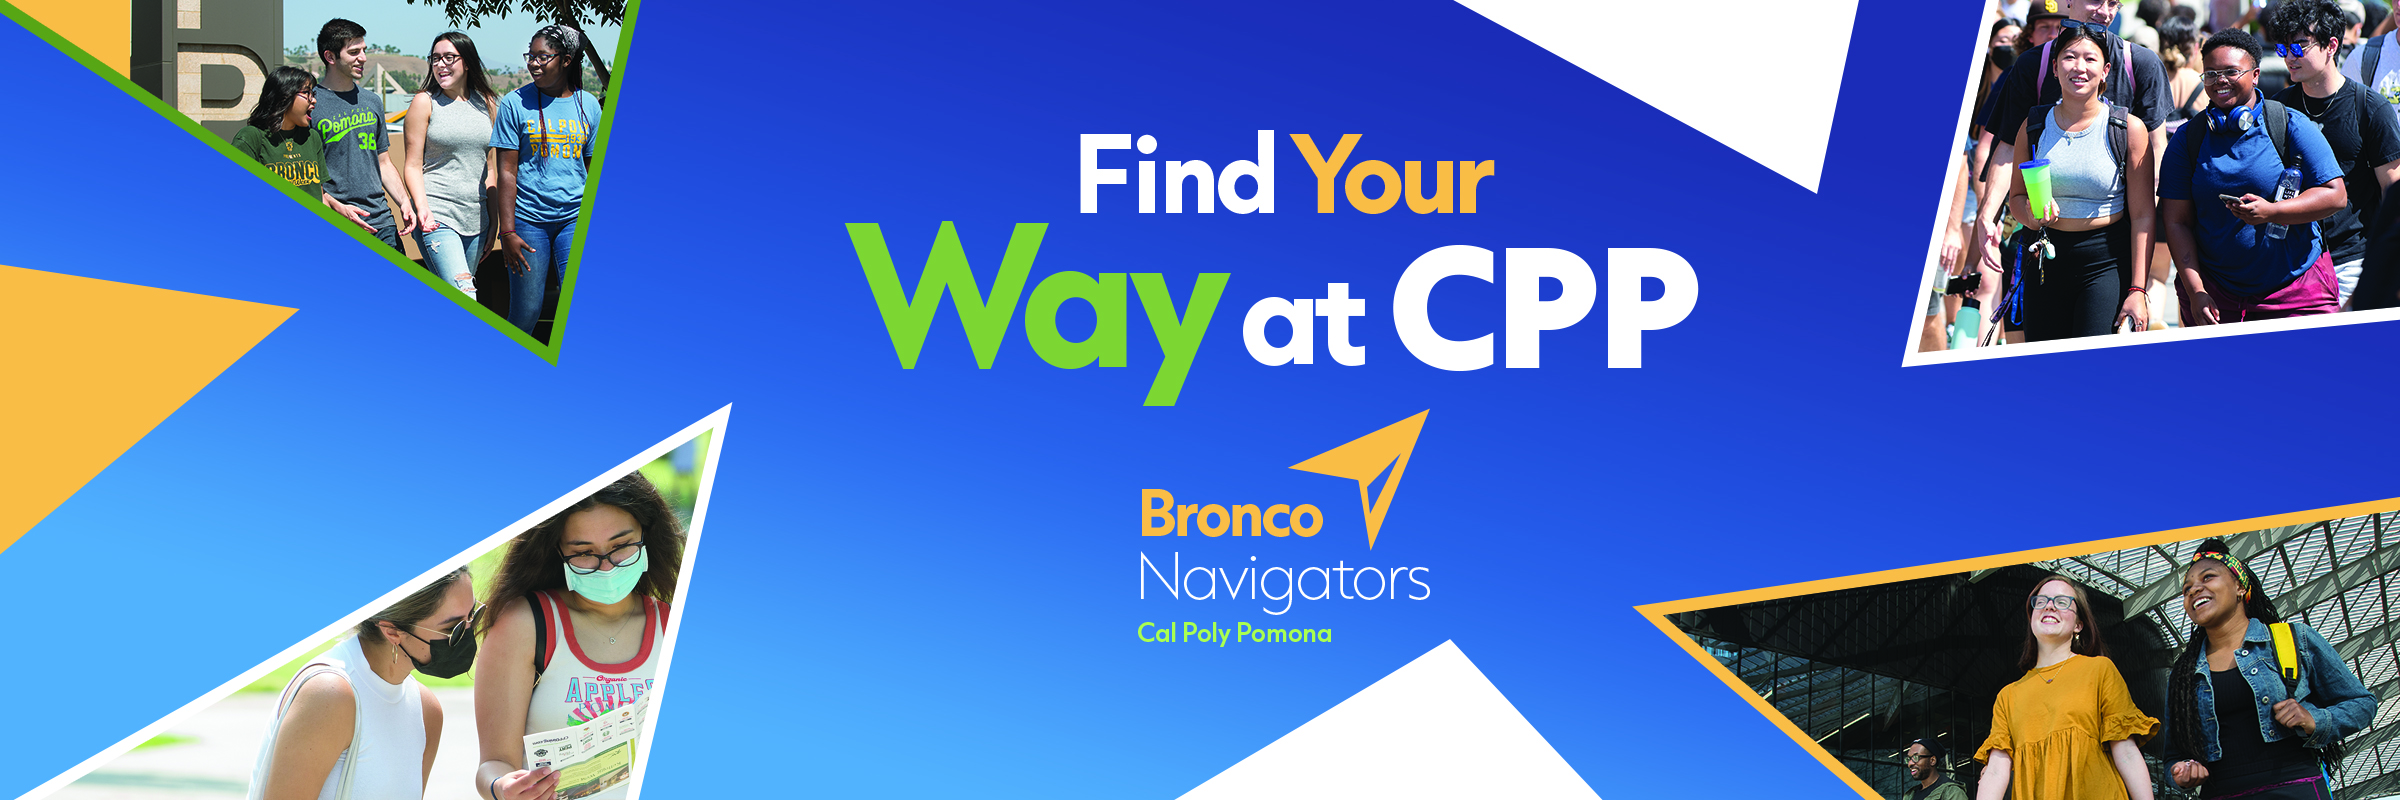 Find your Way at CPP. Bronco Navigators